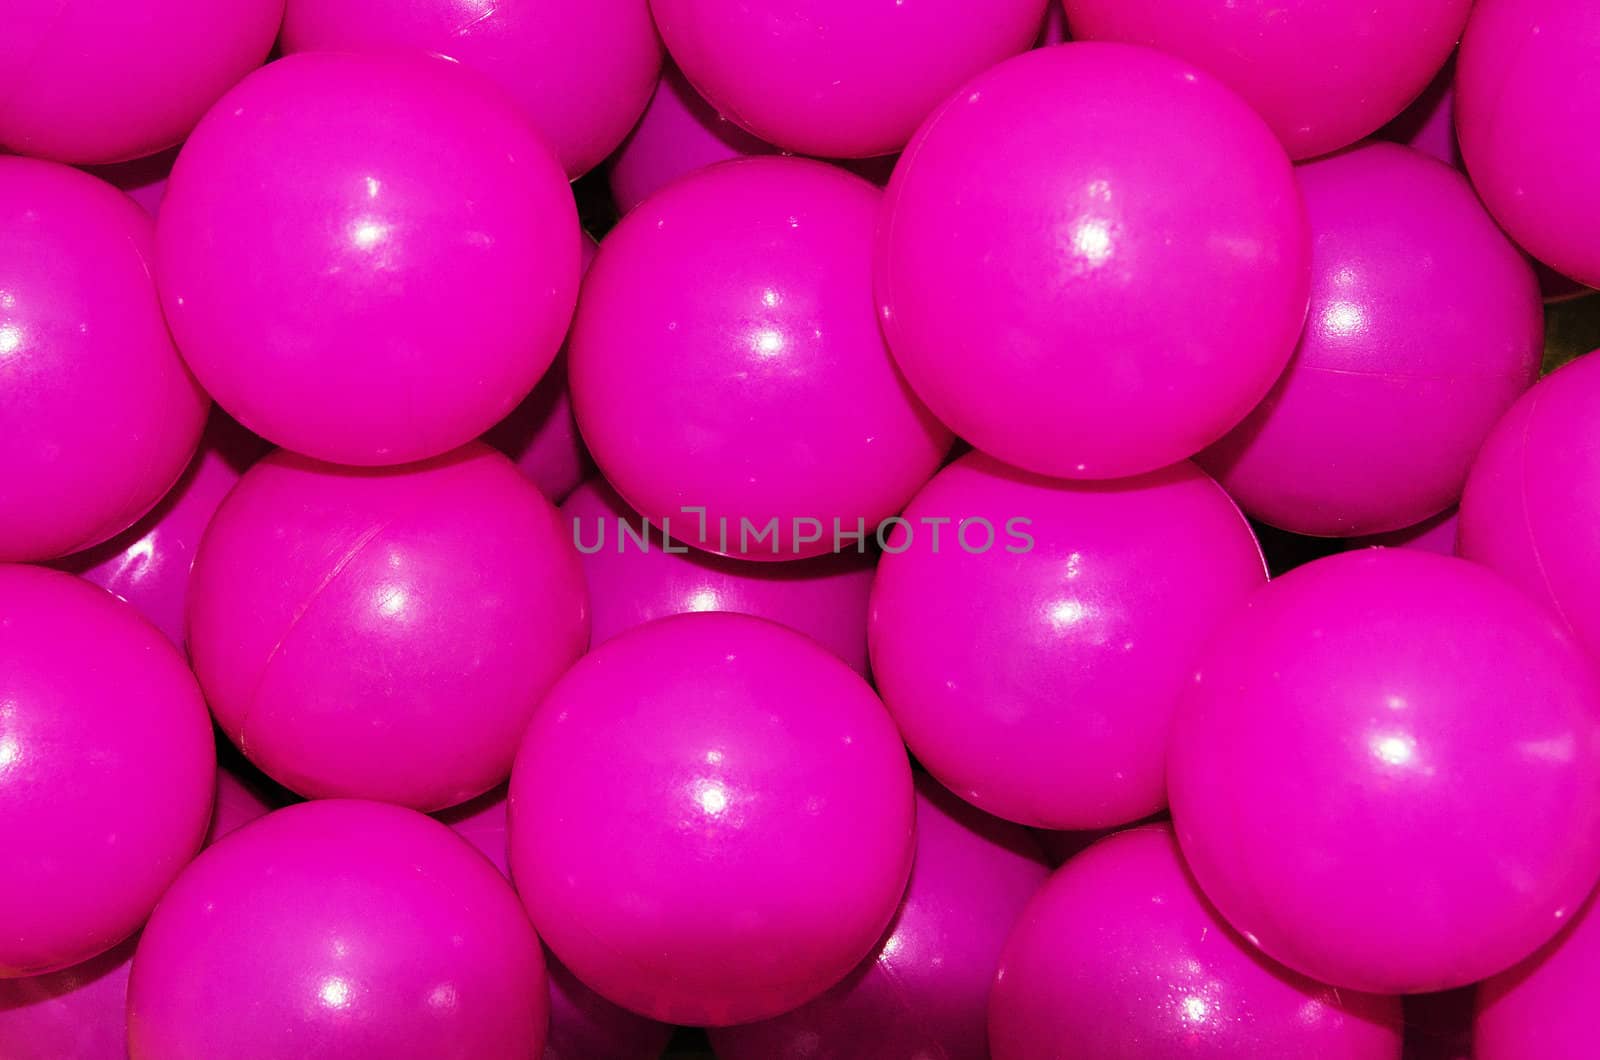 Pink balls by Jez22